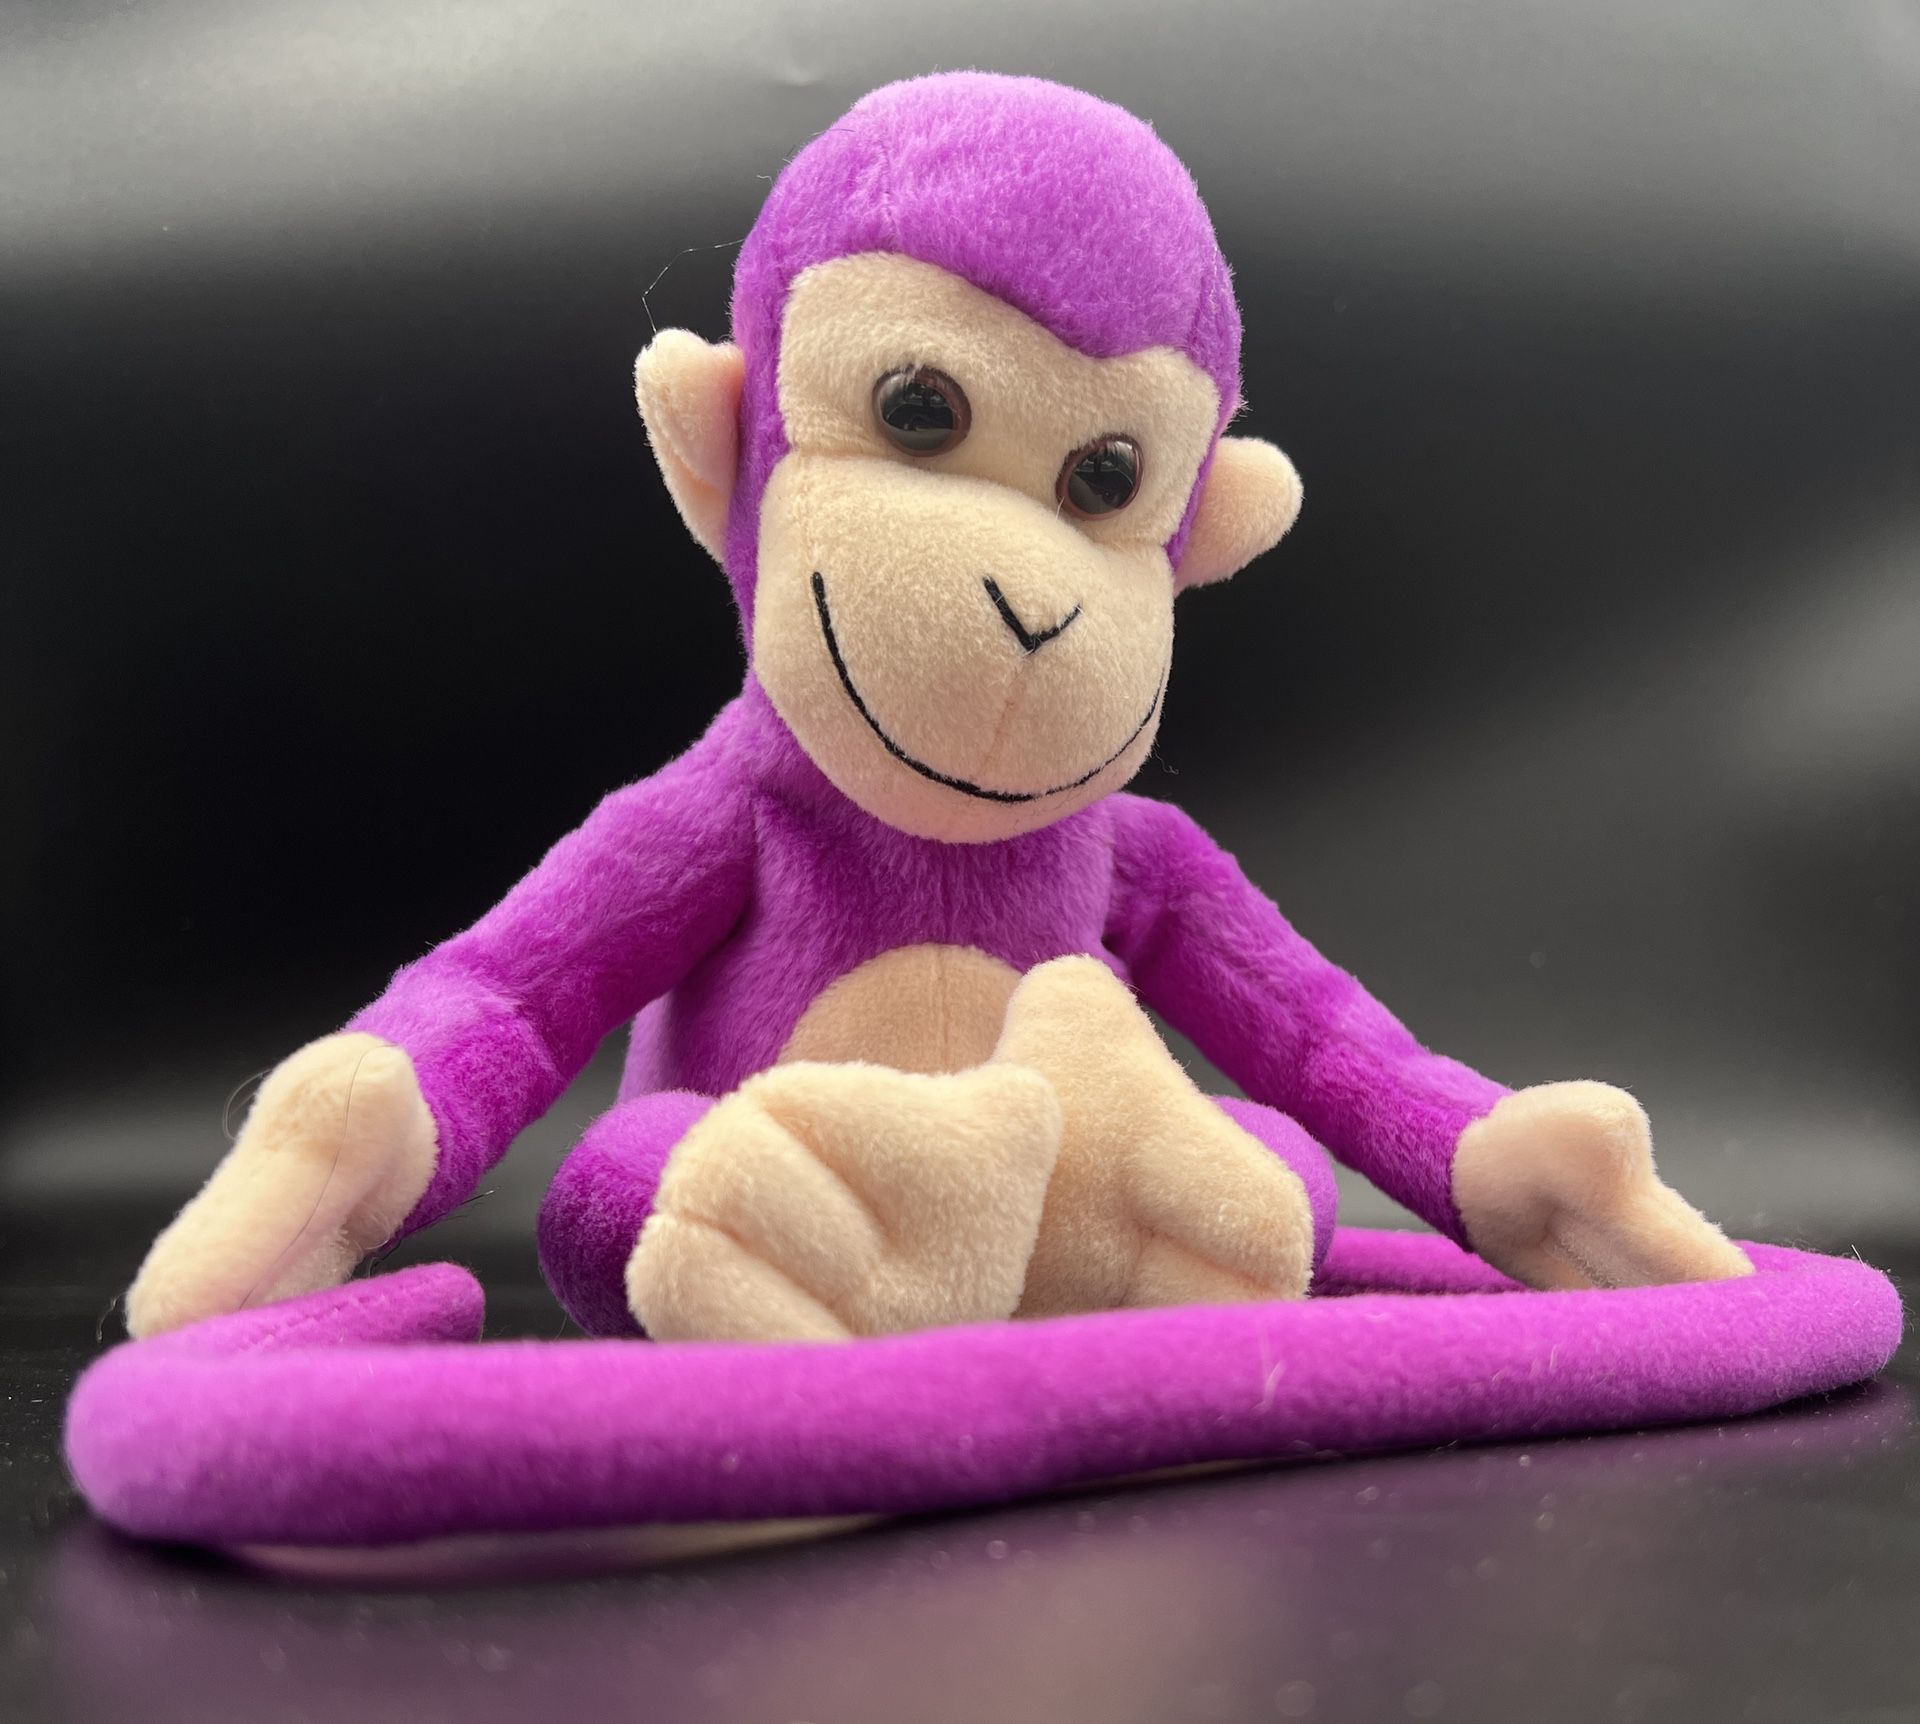 Stuffed Monkey With Long Tail